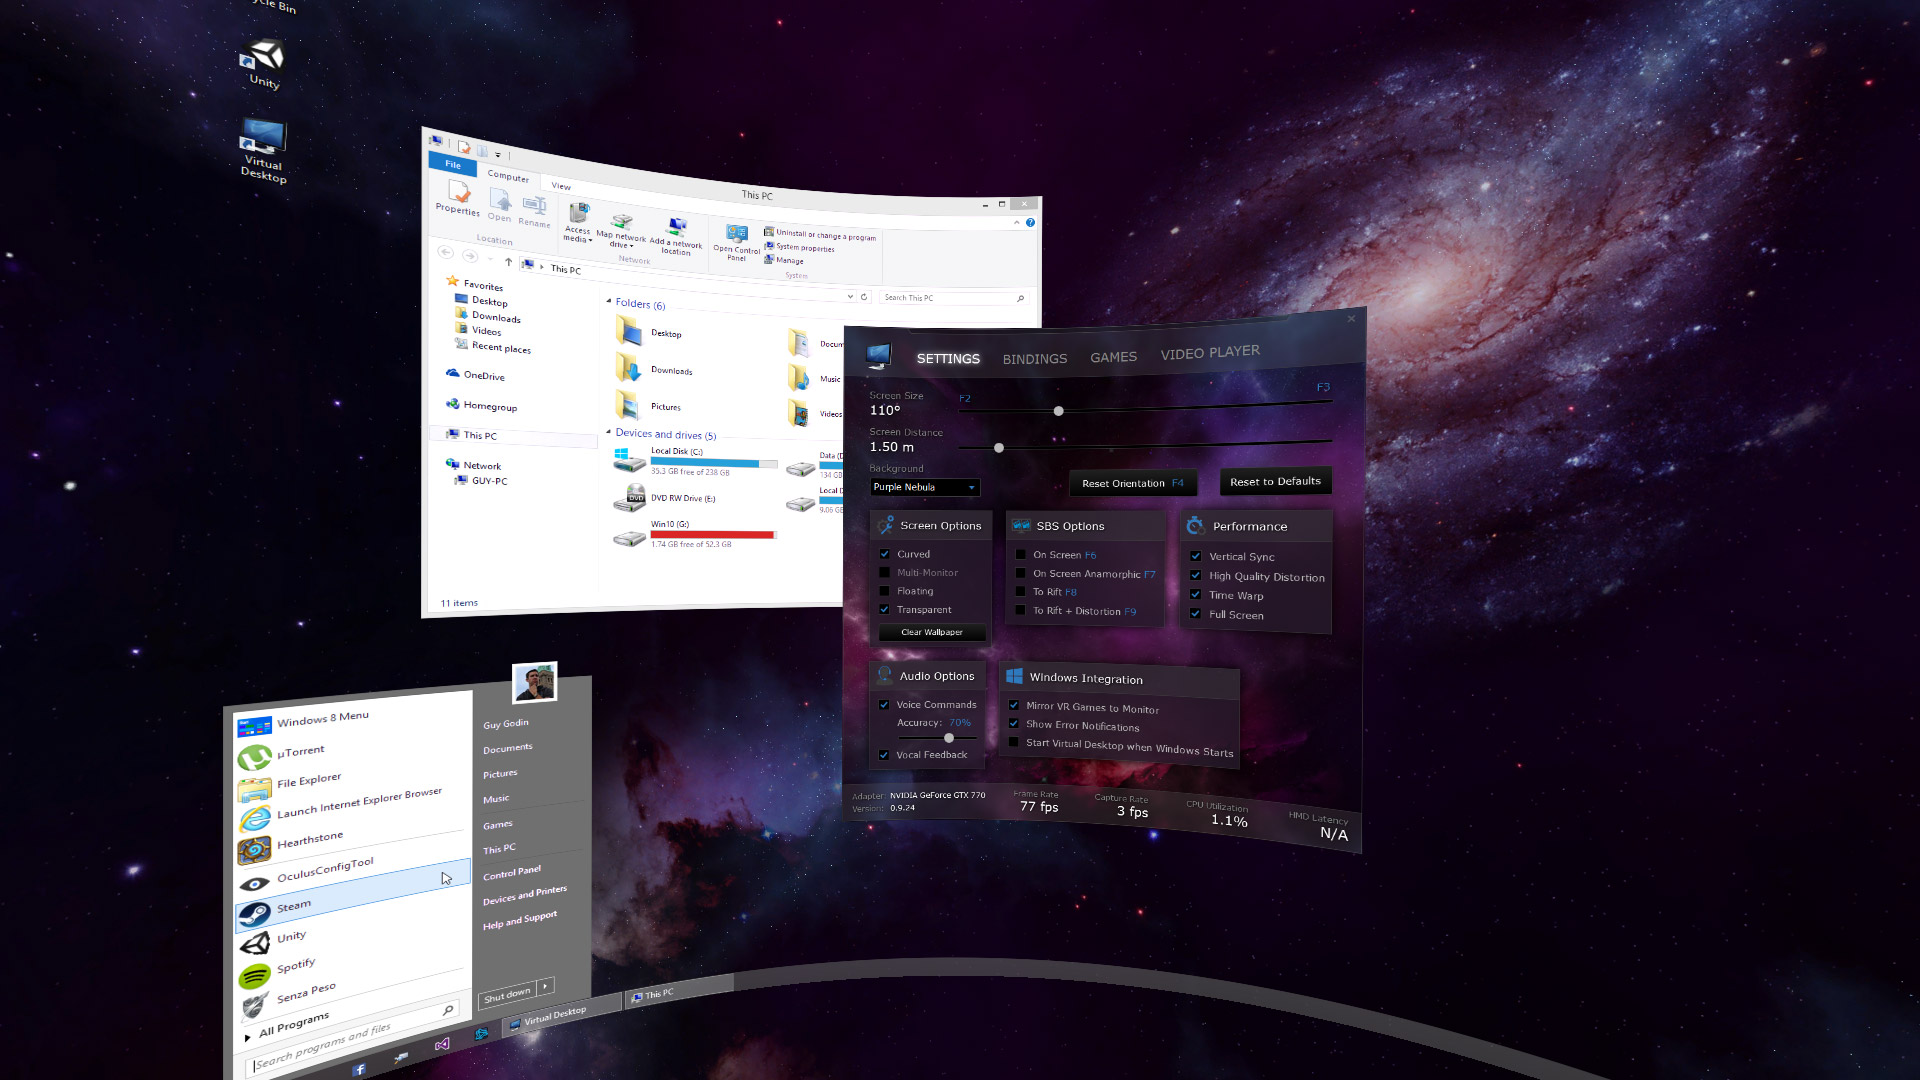 steam vr virtual desktop oculus quest